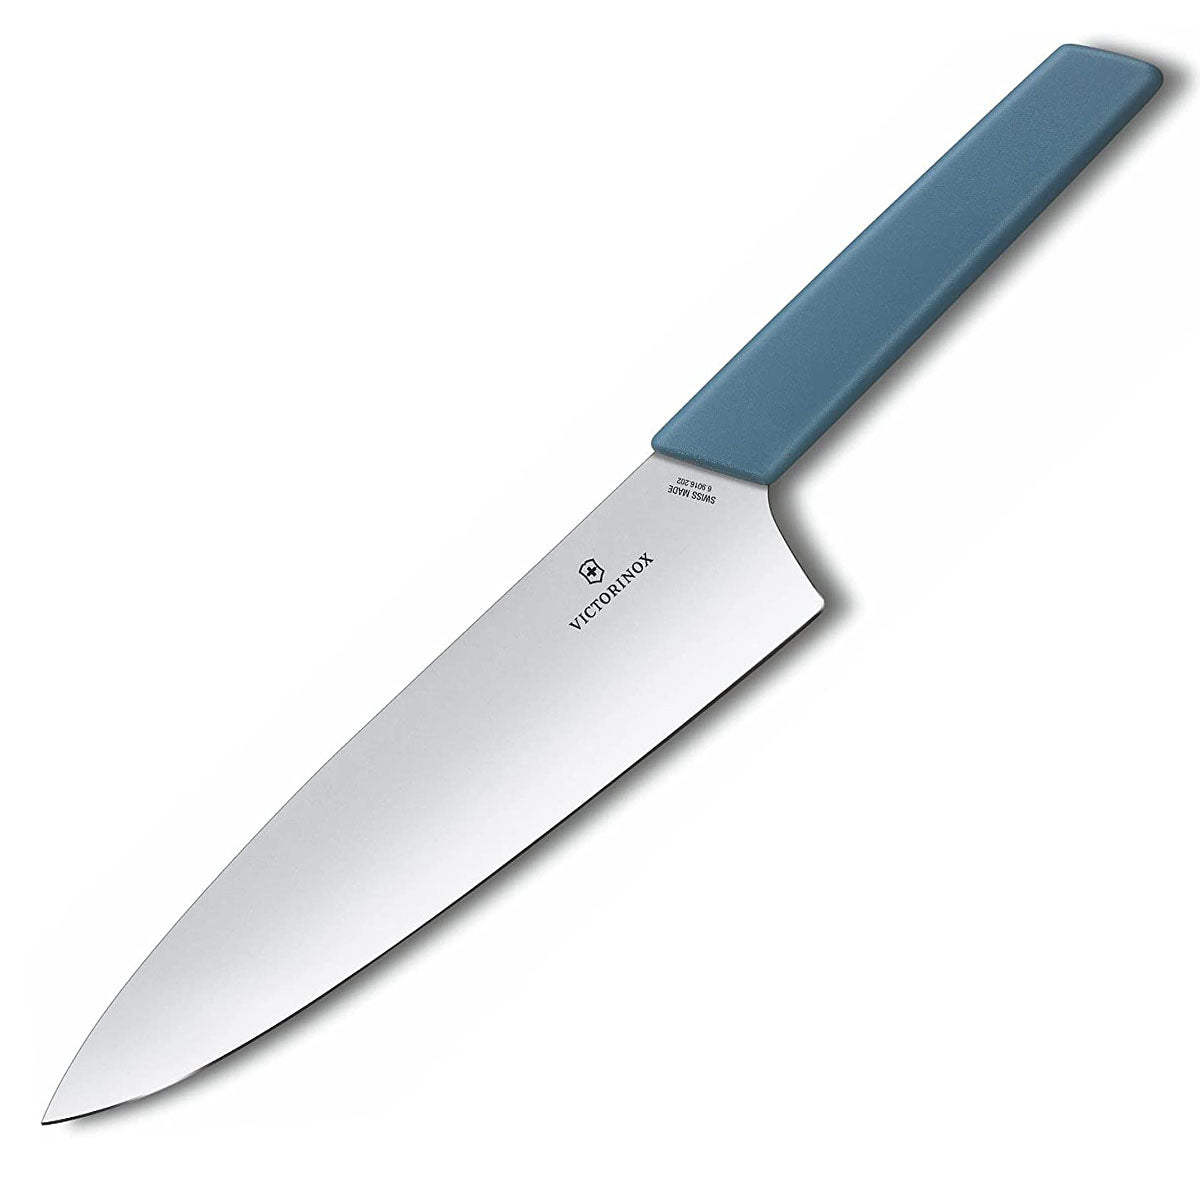 Victorinox Swiss Modern Knife Block